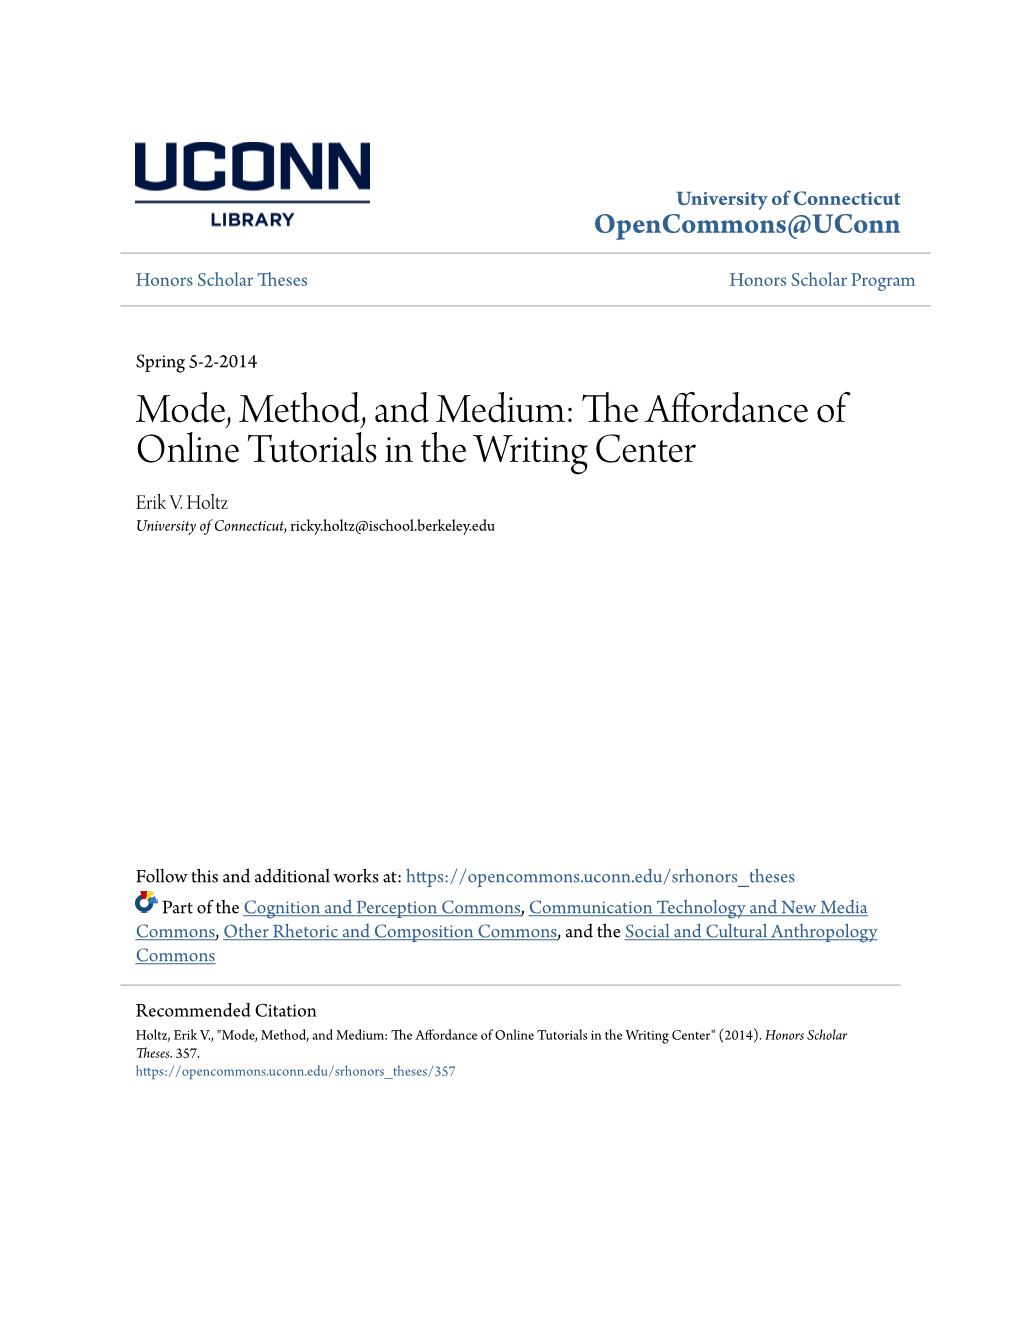 Mode, Method, and Medium: the Affordance of Online Tutorials in the Writing Center Erik V